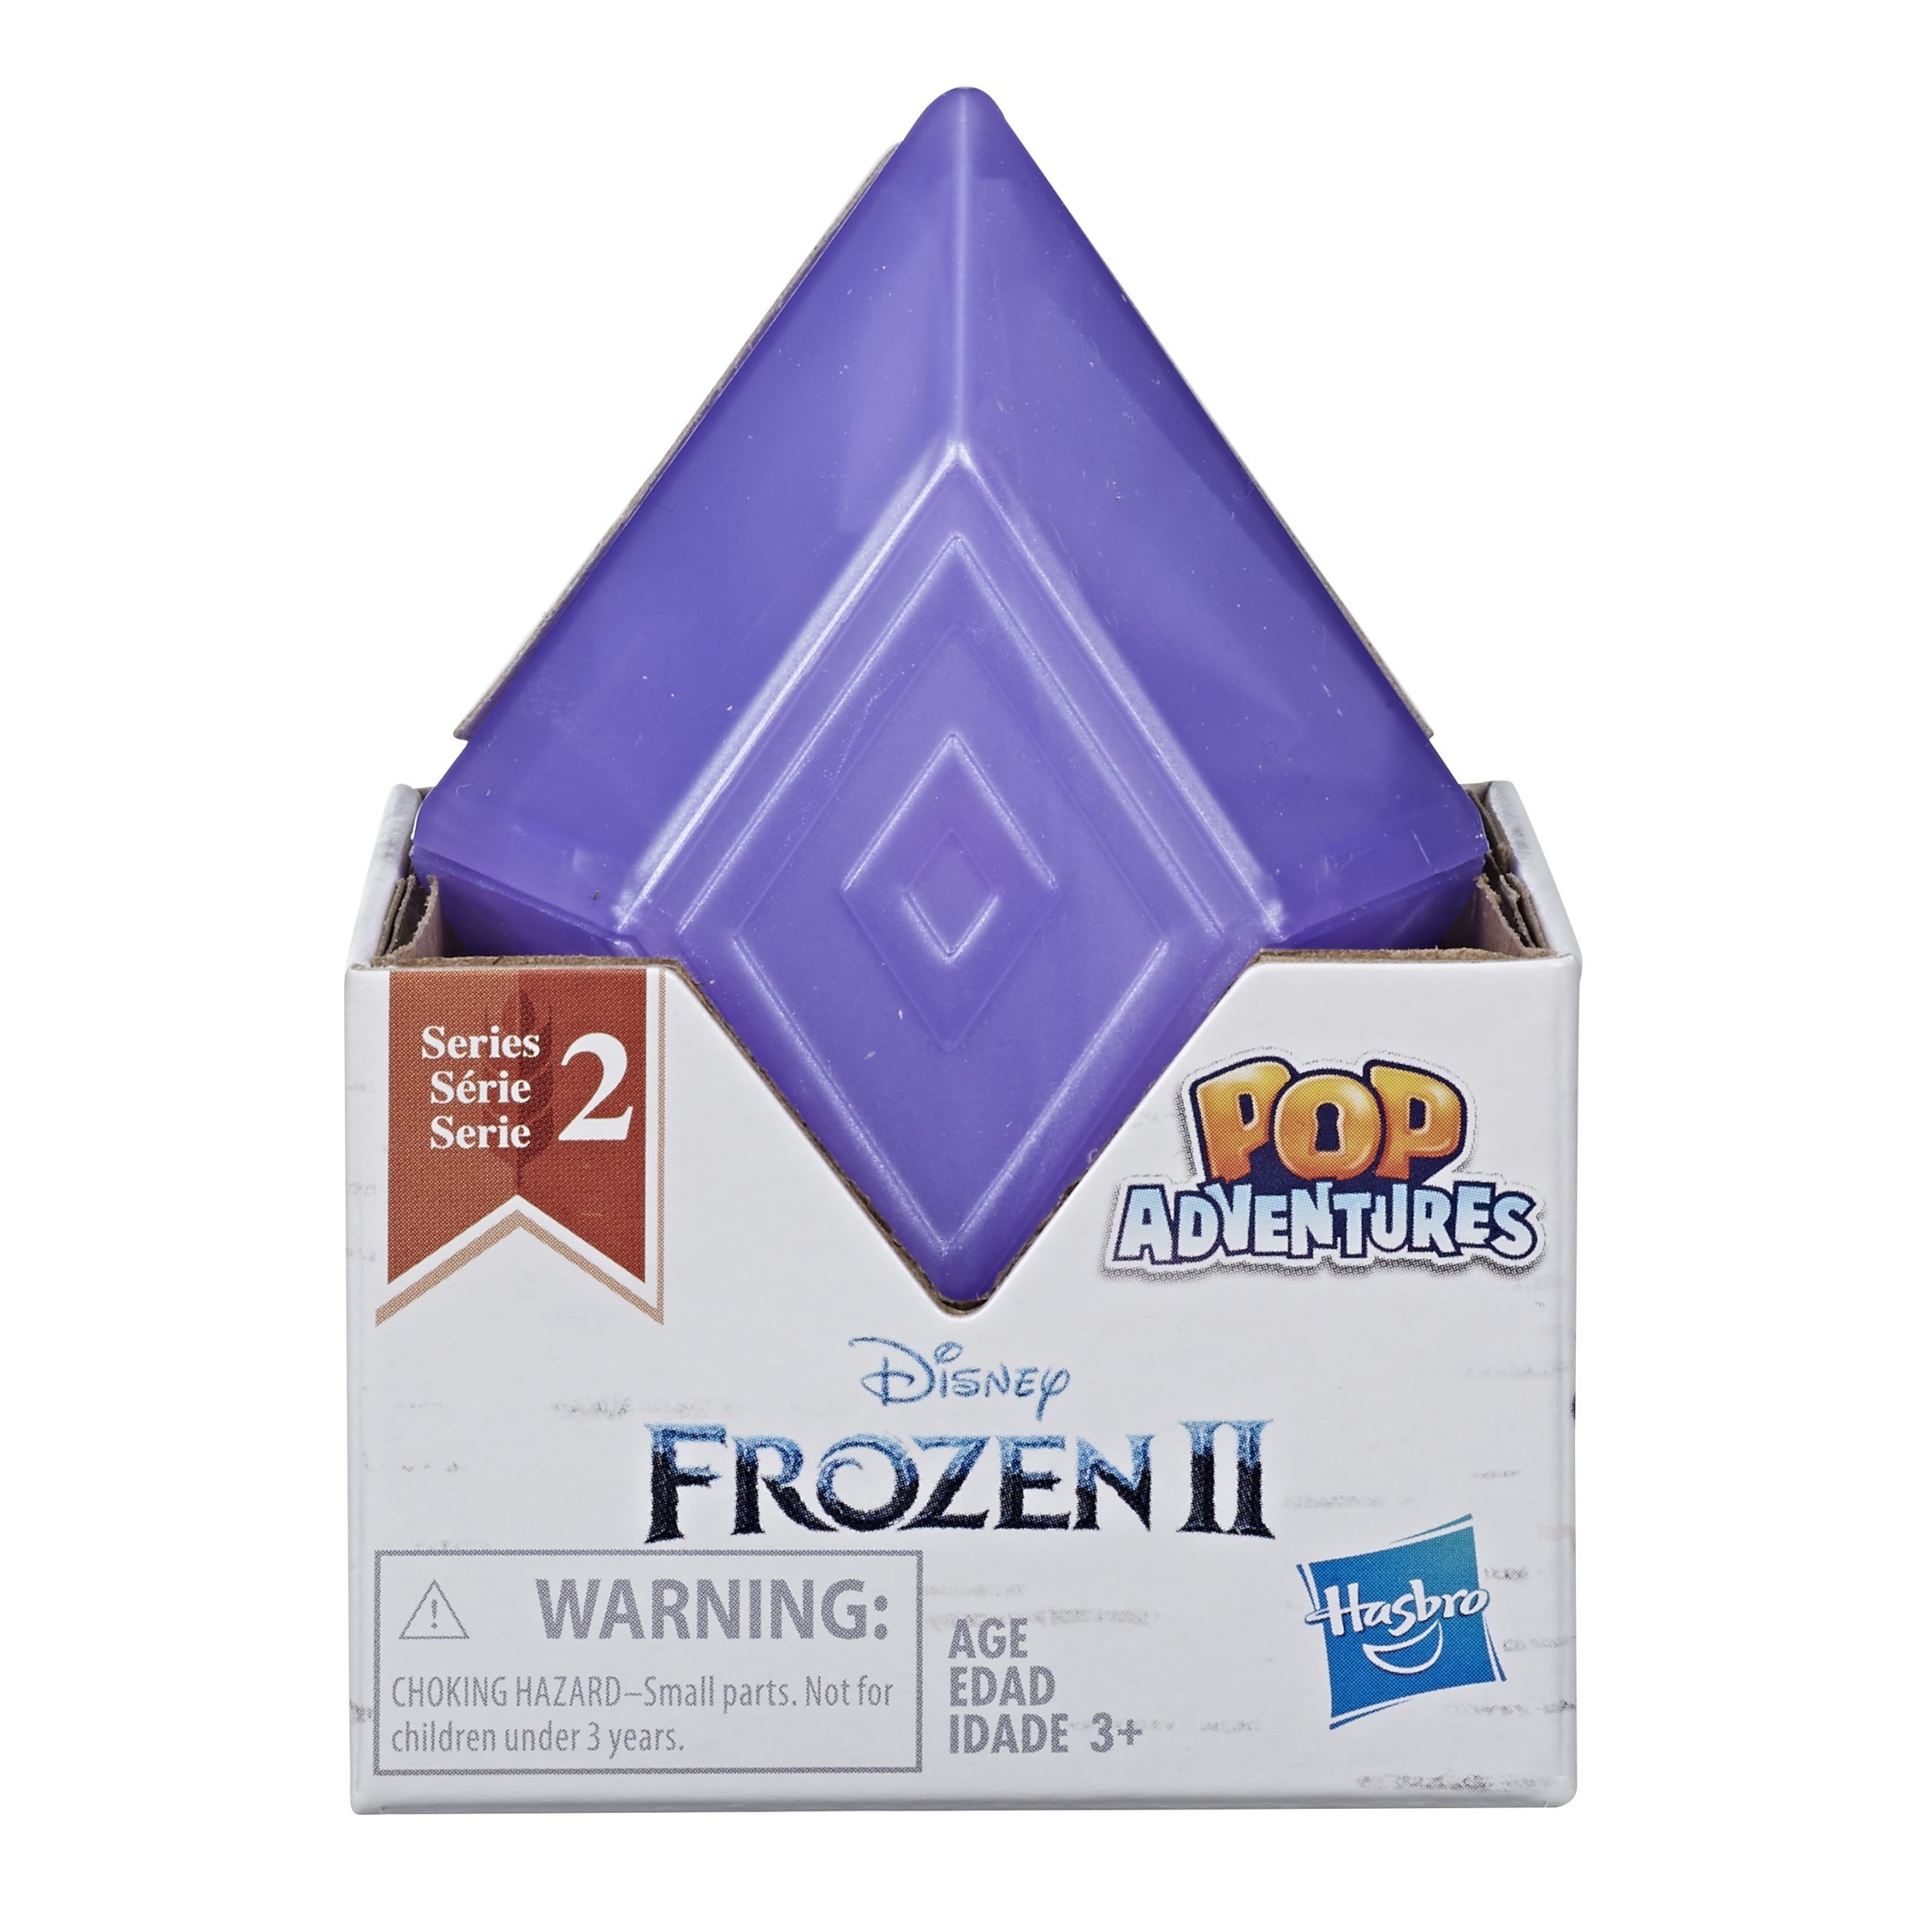 Disney Frozen 2 Pop Adventures Series 1 Surprise Blind Box E7276 1τμχ - 